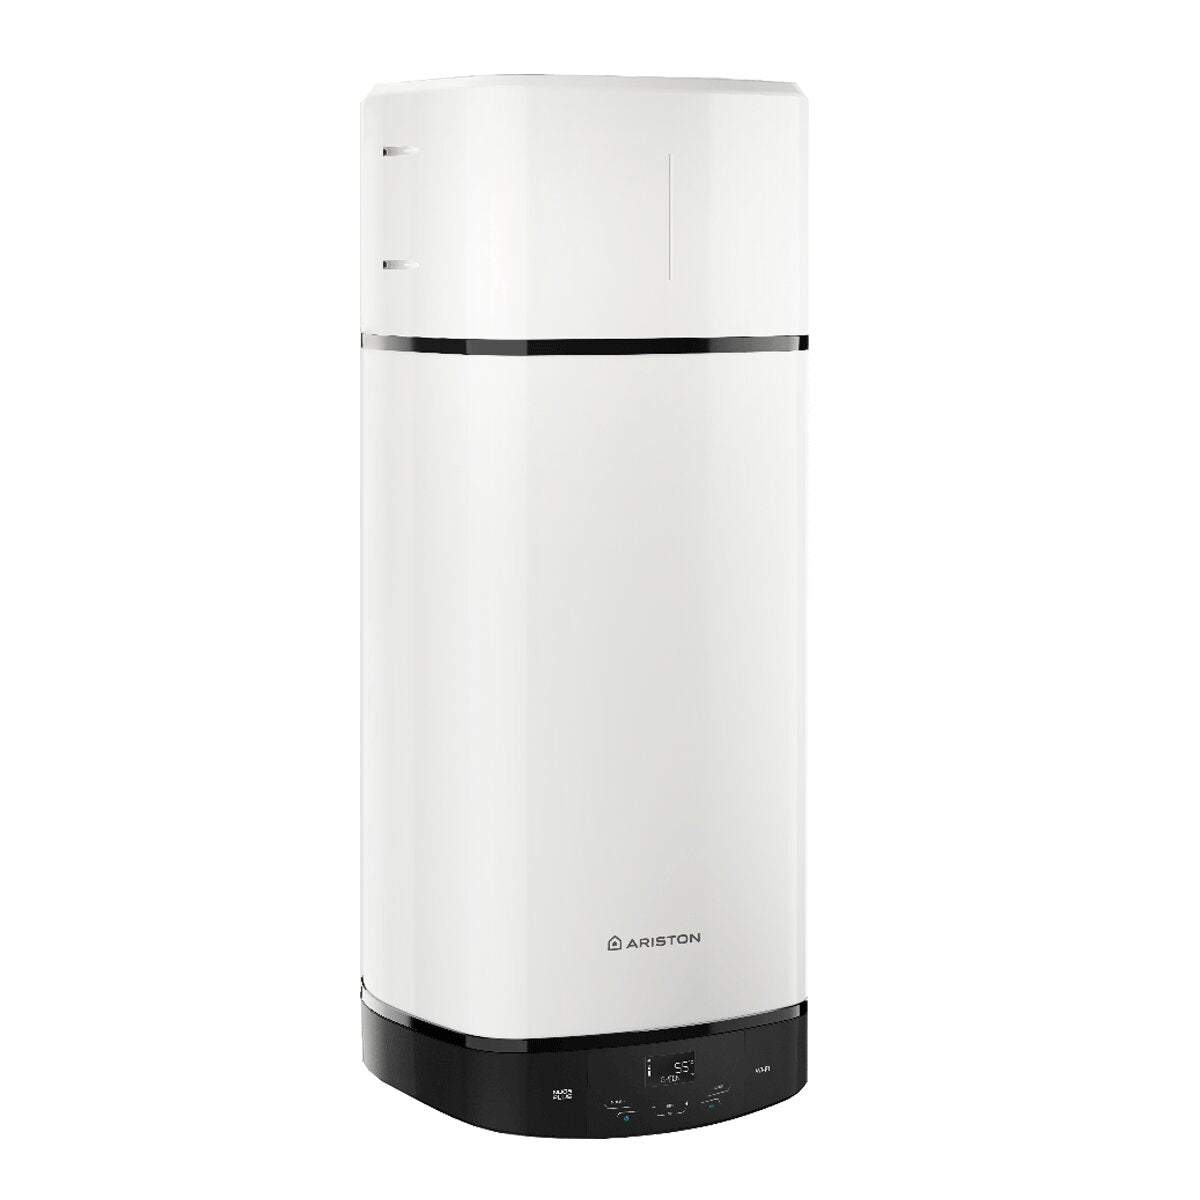 Ariston Nuos Plus R290 S2 WiFi A+ 150 Liter Wärmepumpen-Warmwasserbereiter